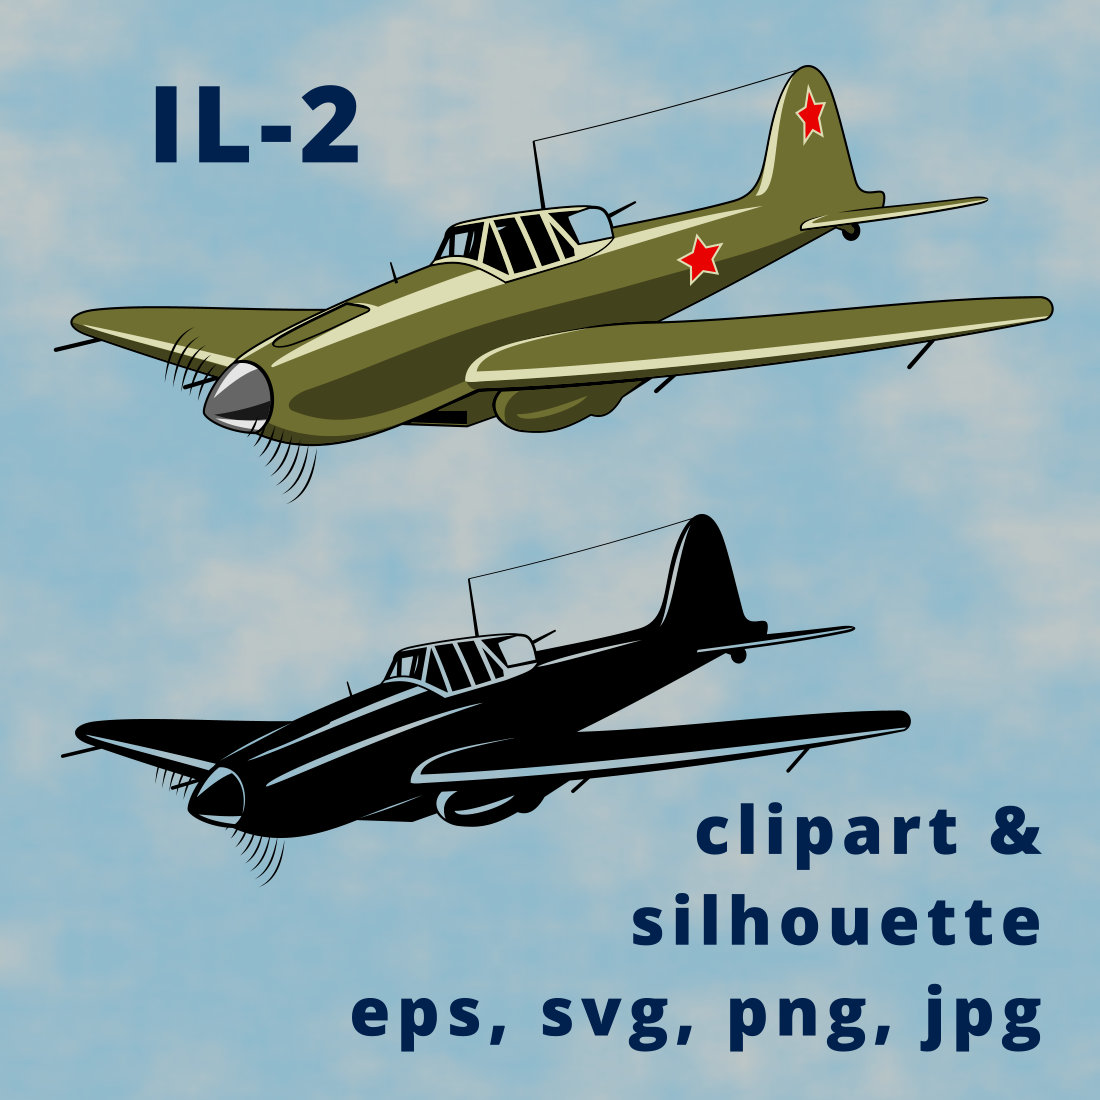 IL-2 Soviet Fighter Plane Clipart cover image.